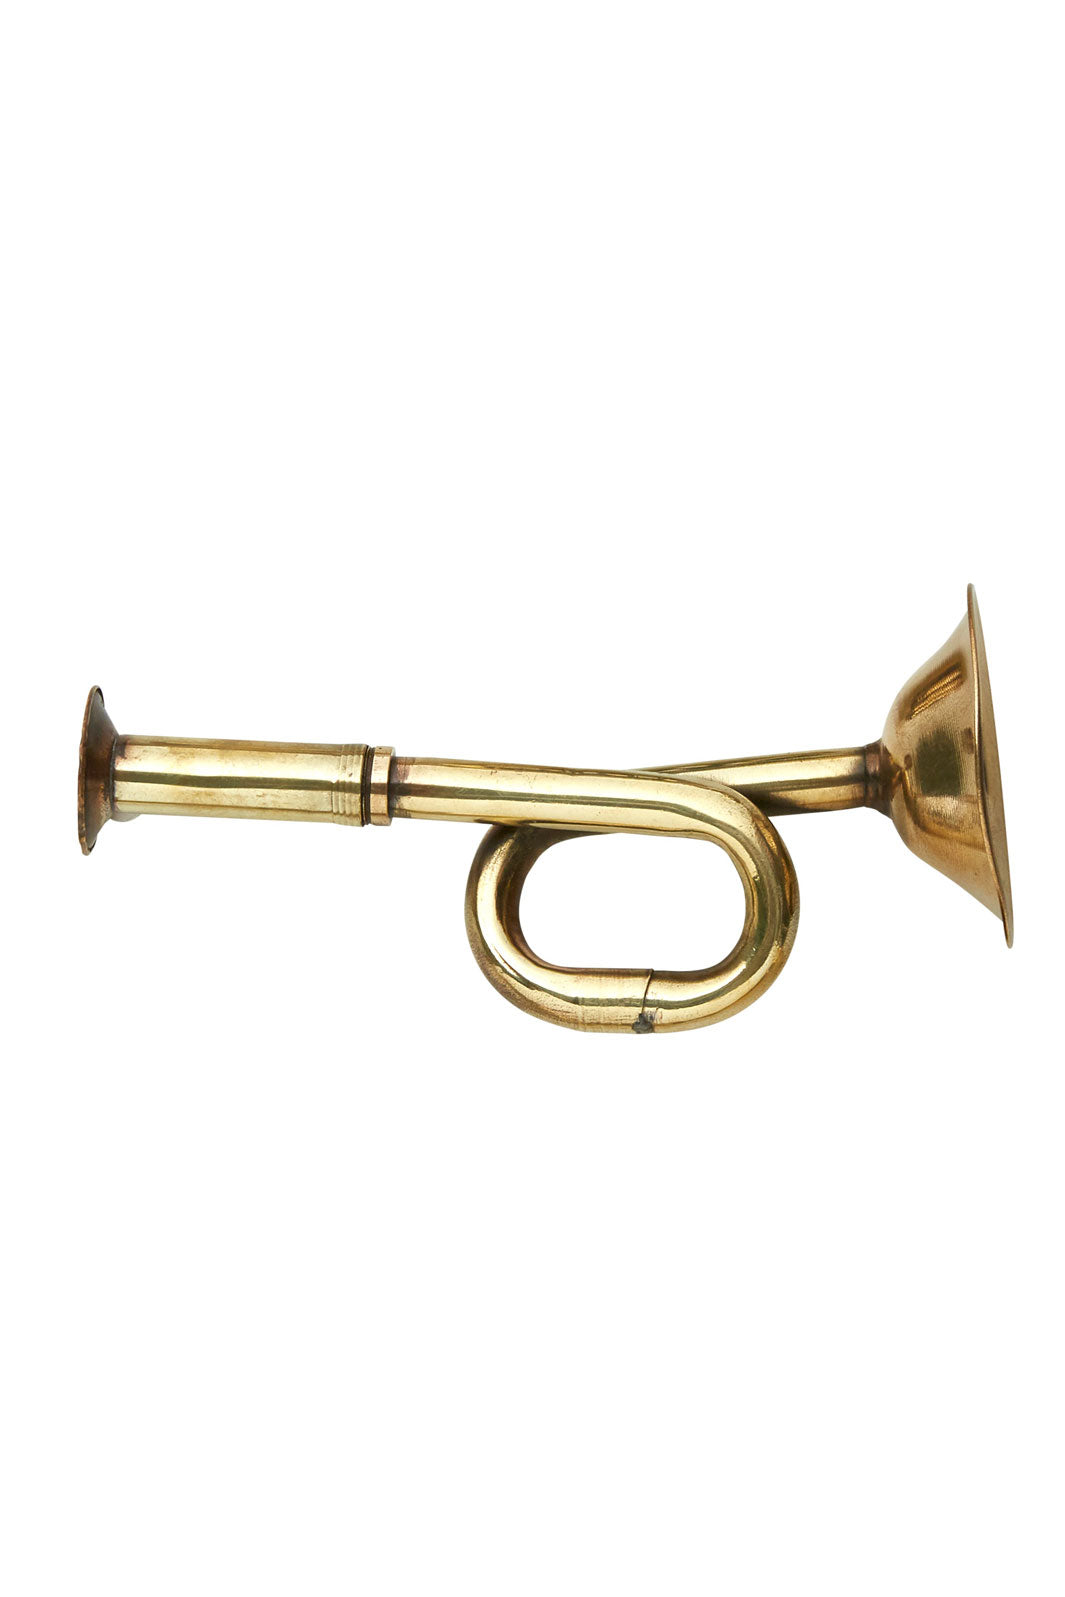 Speedtsberg - Trompet deko 14x5x7cm metal - Brass Jul 